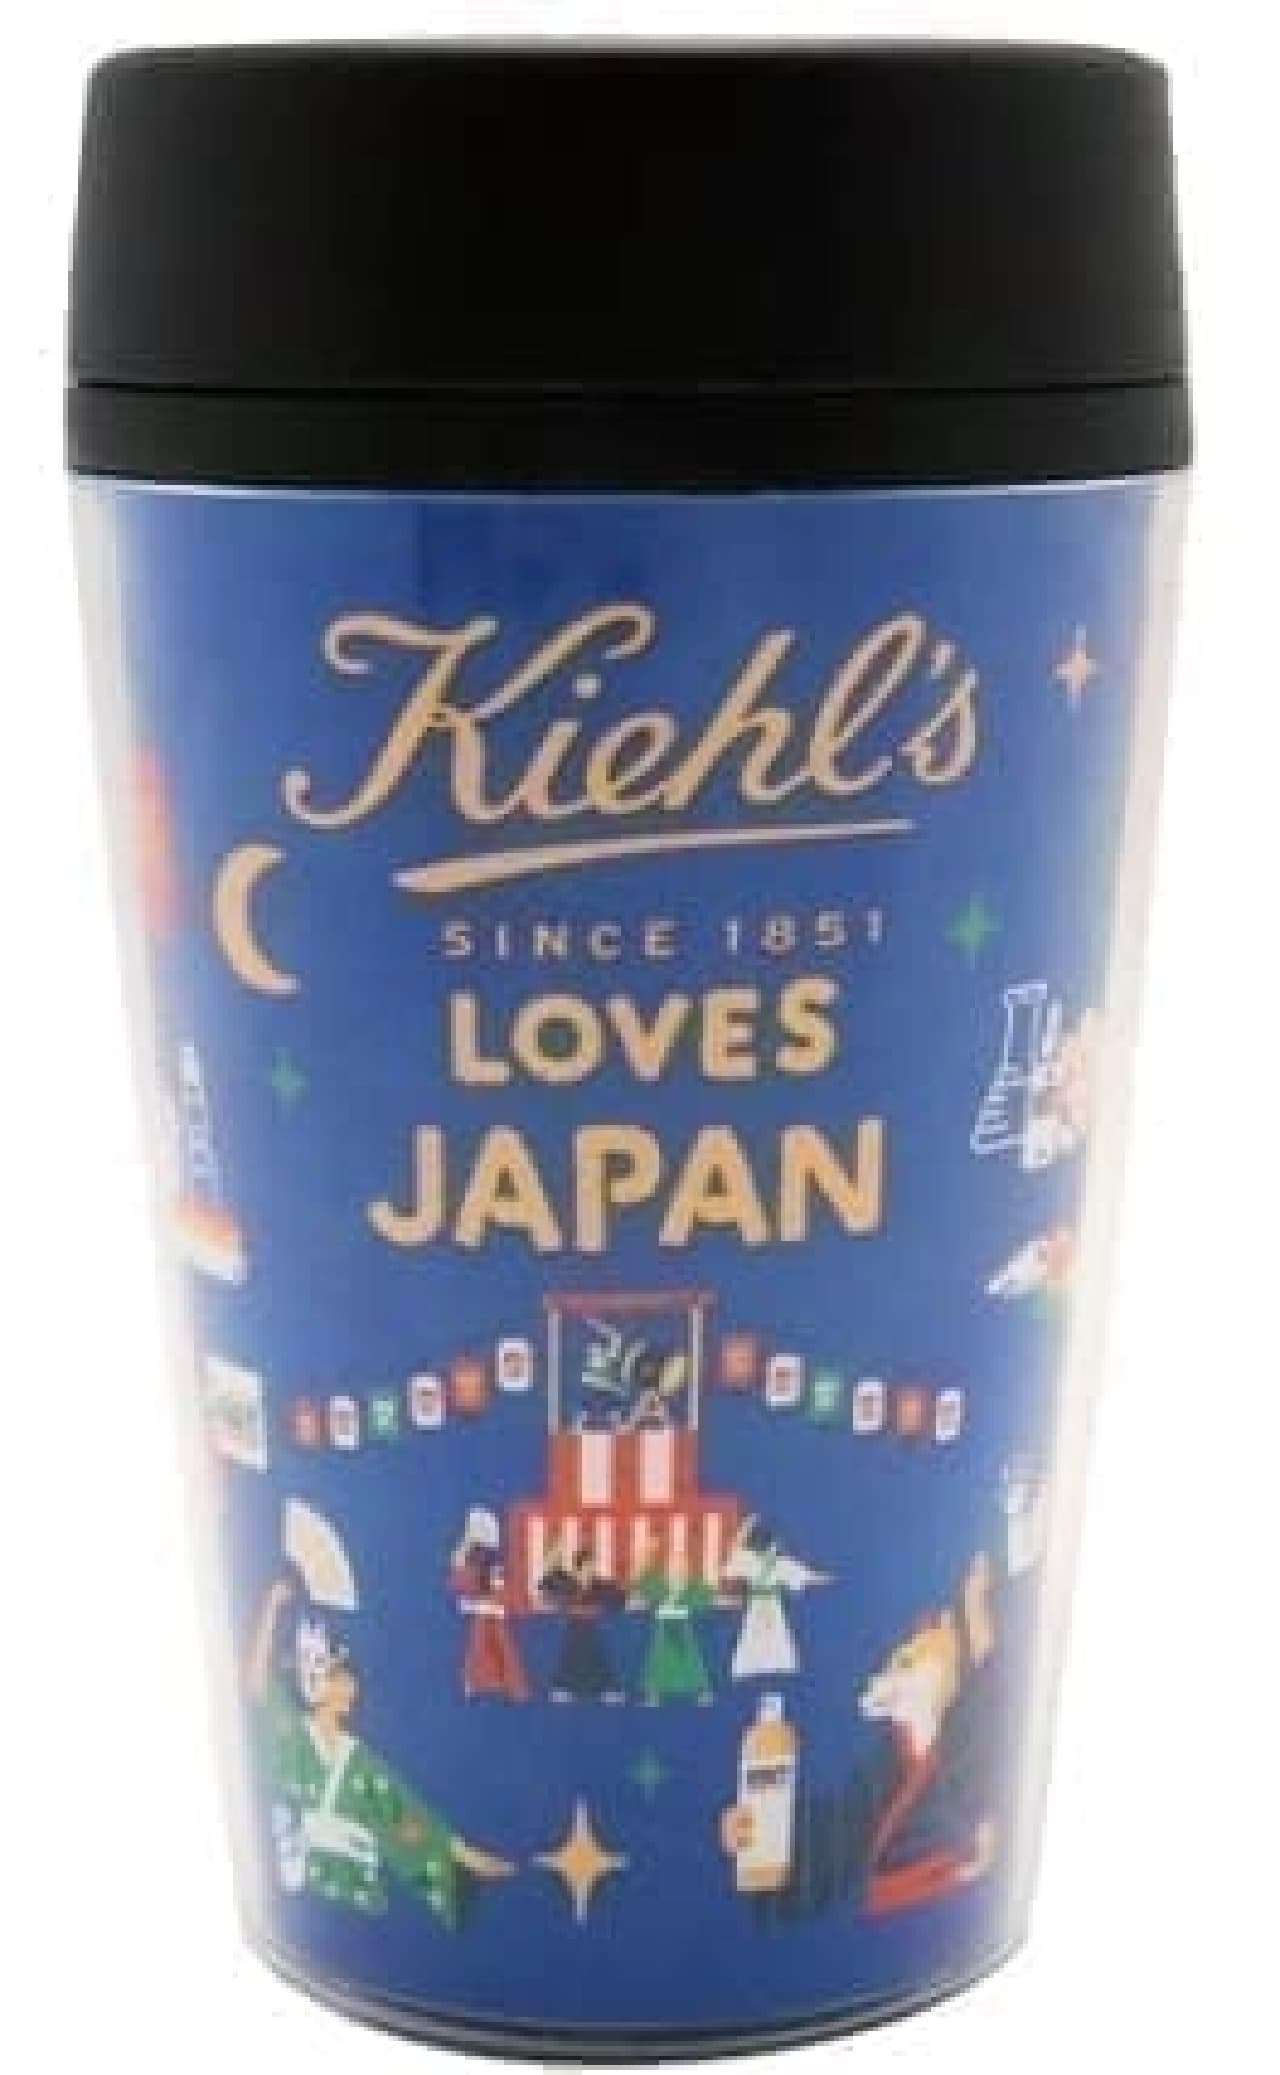 "2020 Kiehl's LOVES JAPAN" tumbler